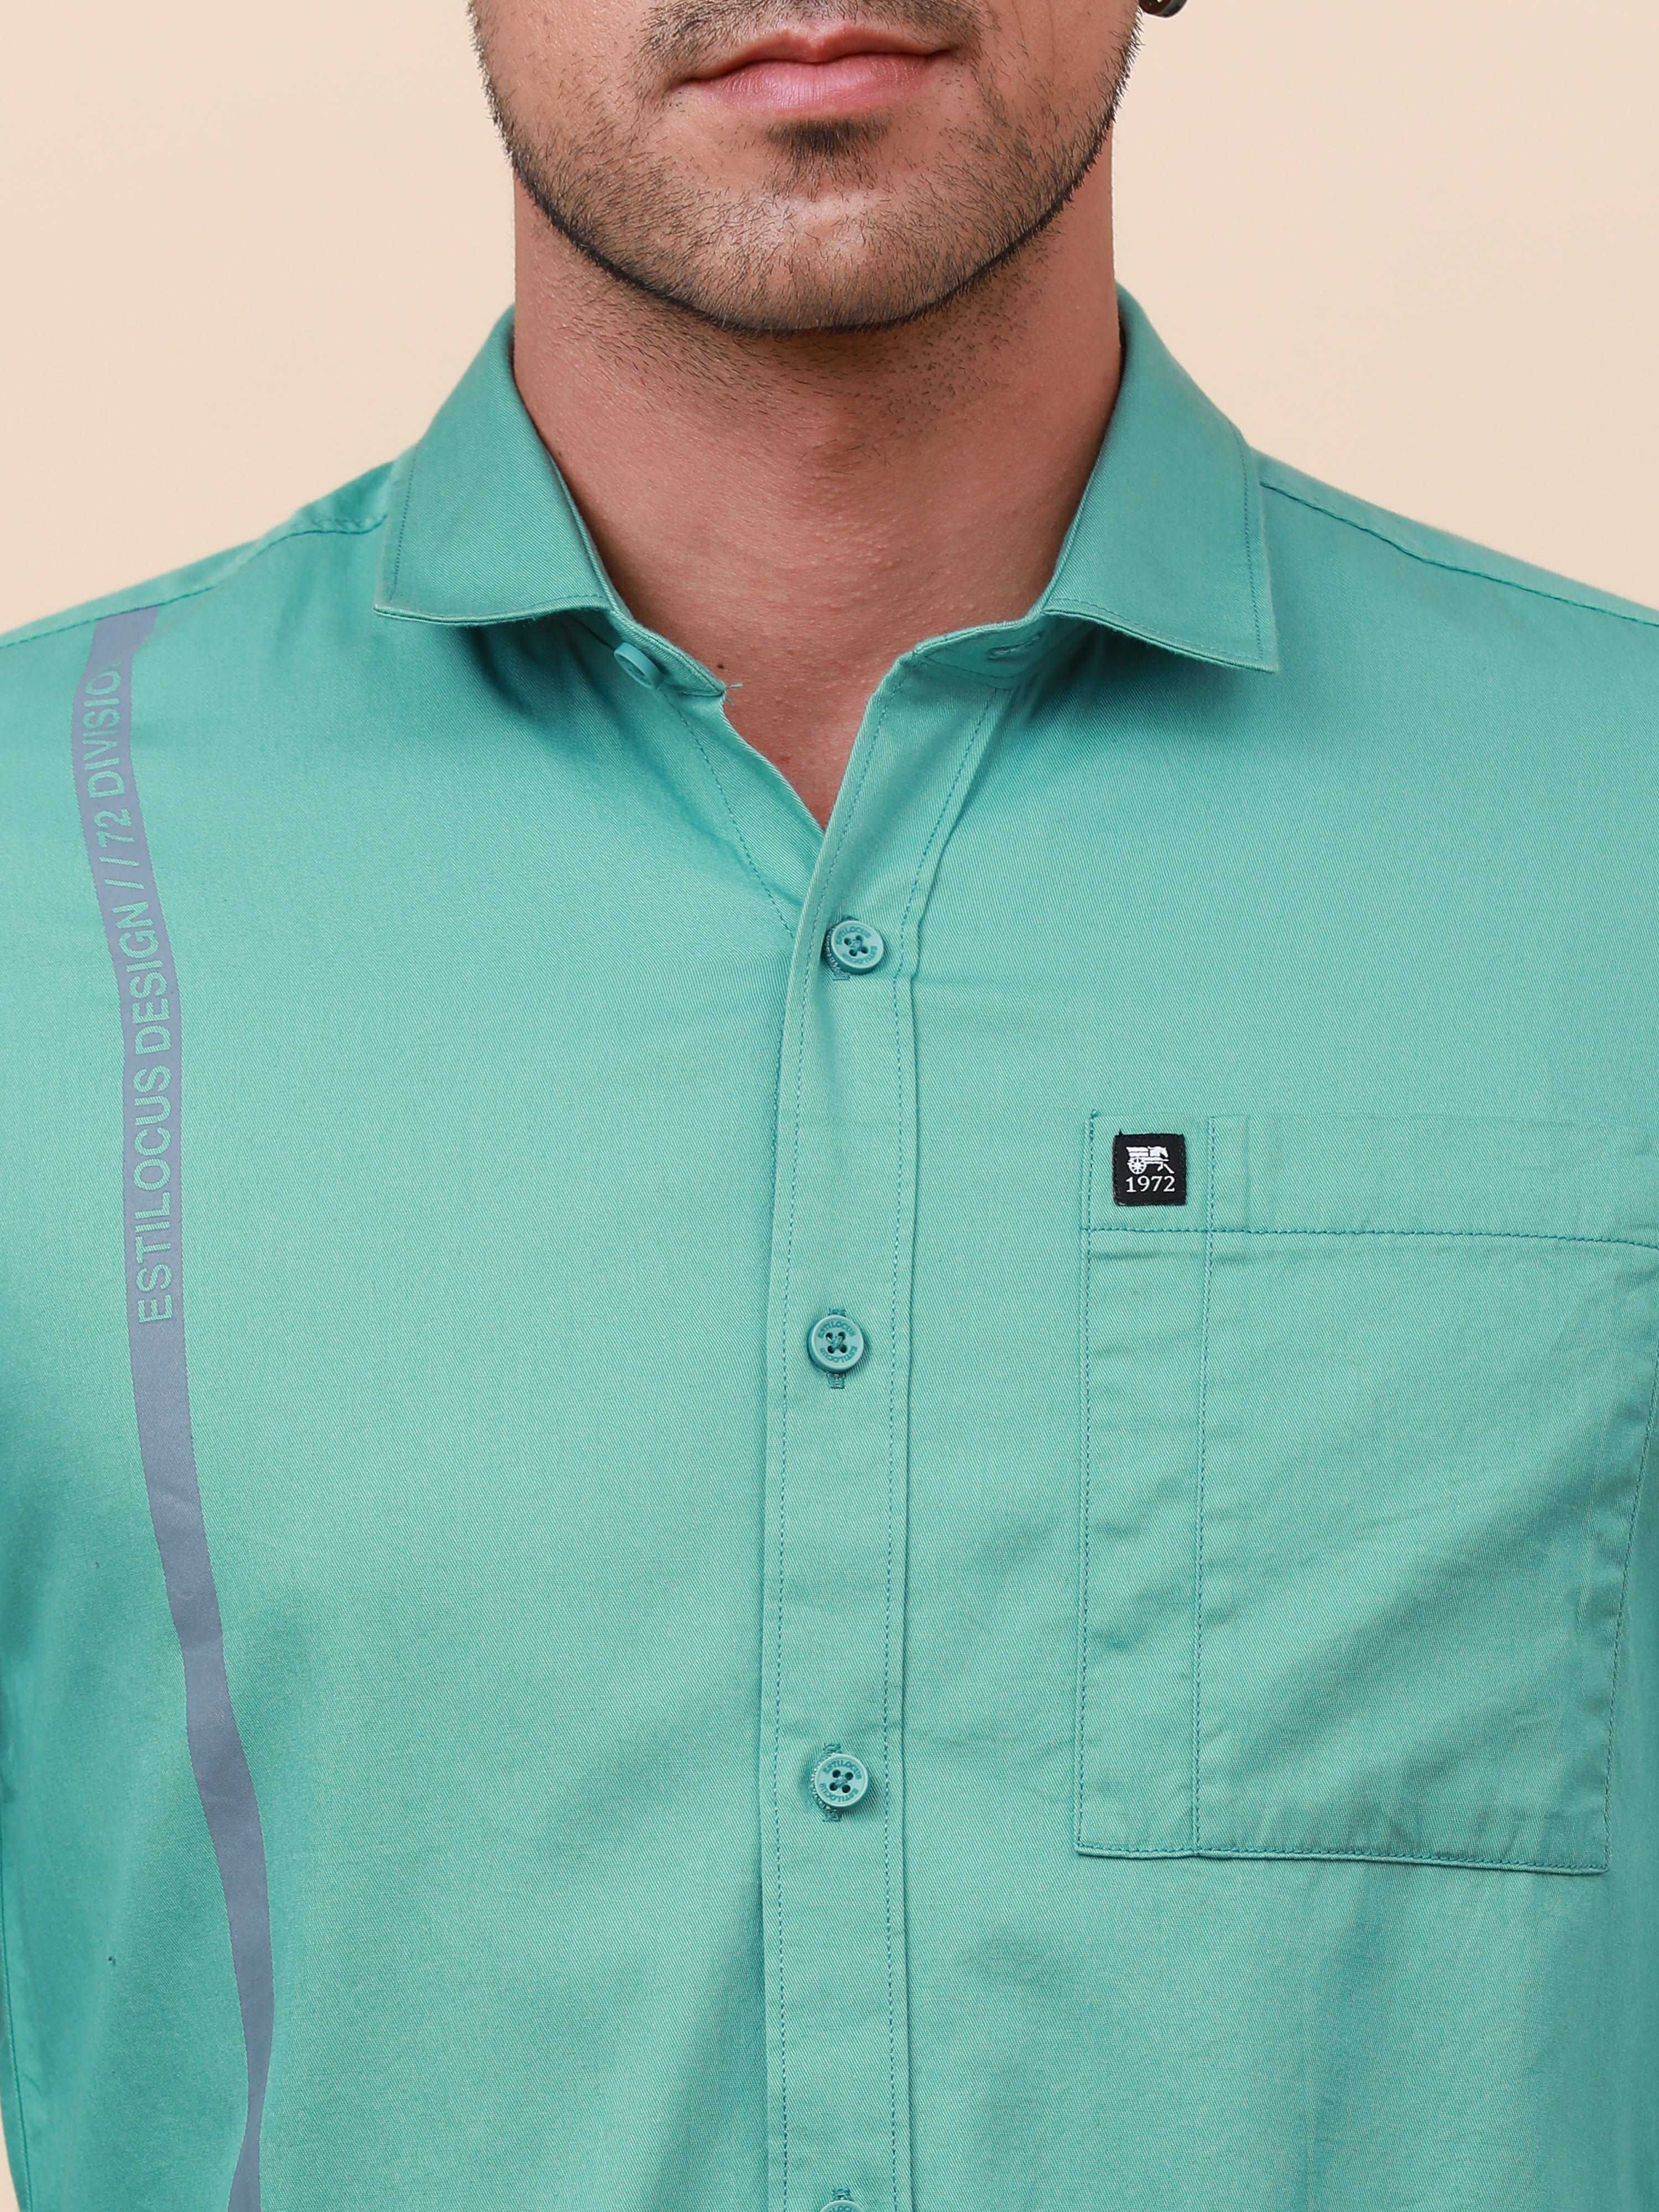 Aqua Marine Solid Single Pocket full sleeve Shirt